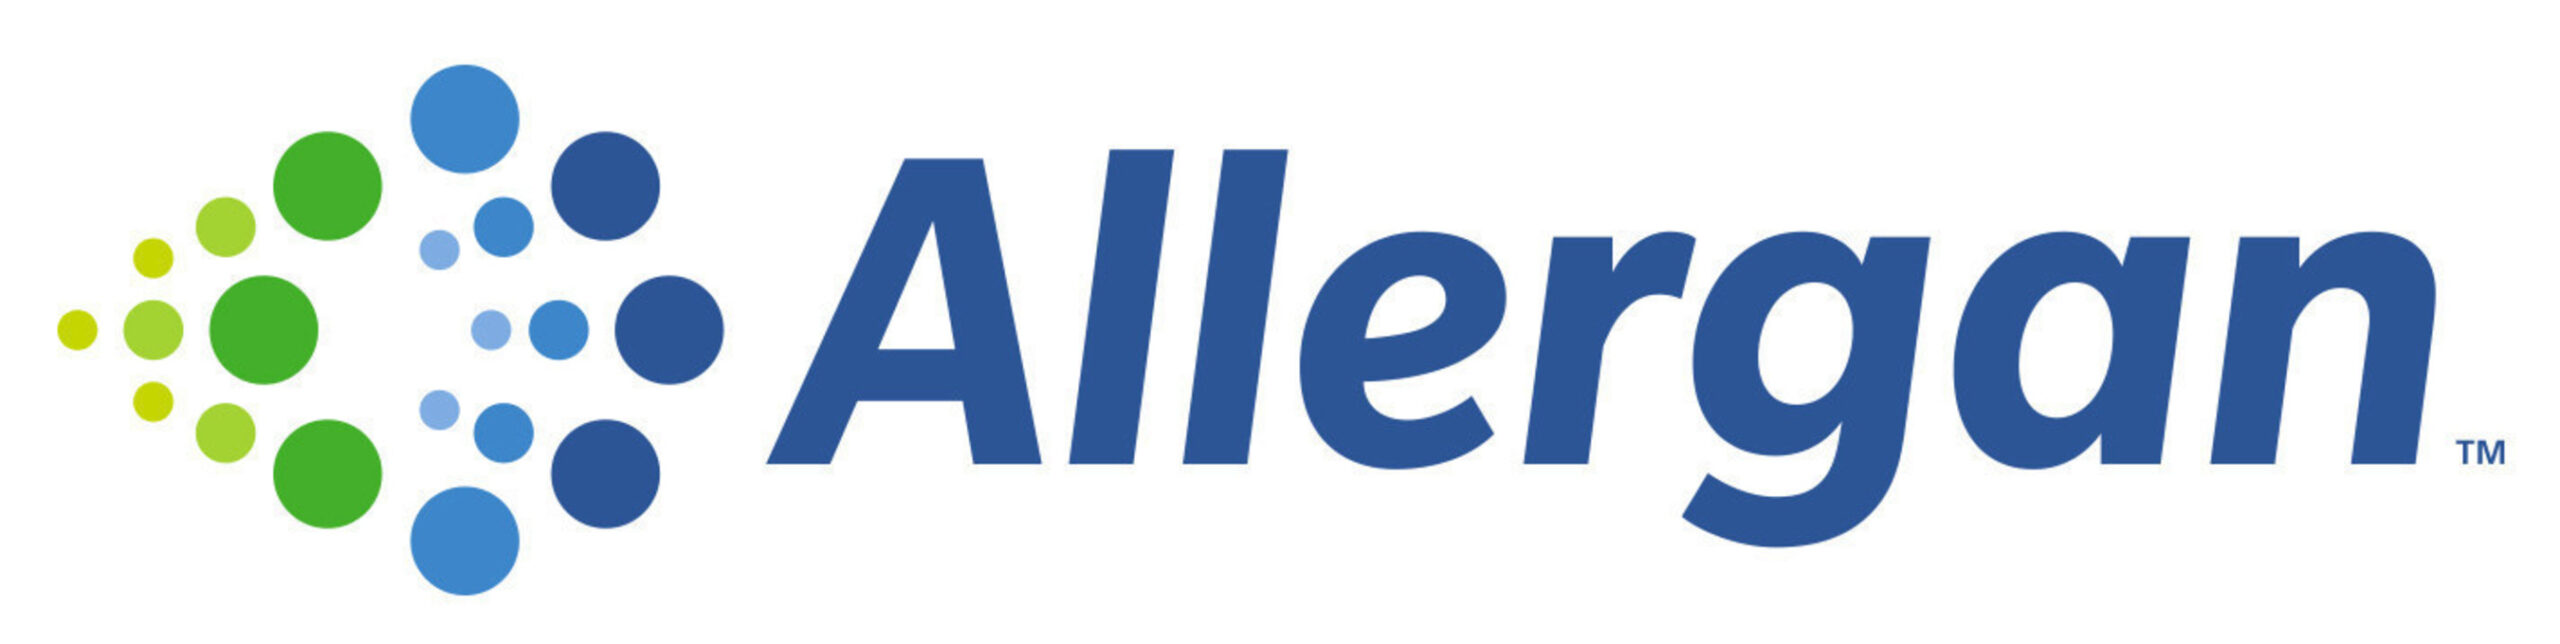 Allergan plc logo (PRNewsFoto/Allergan plc)